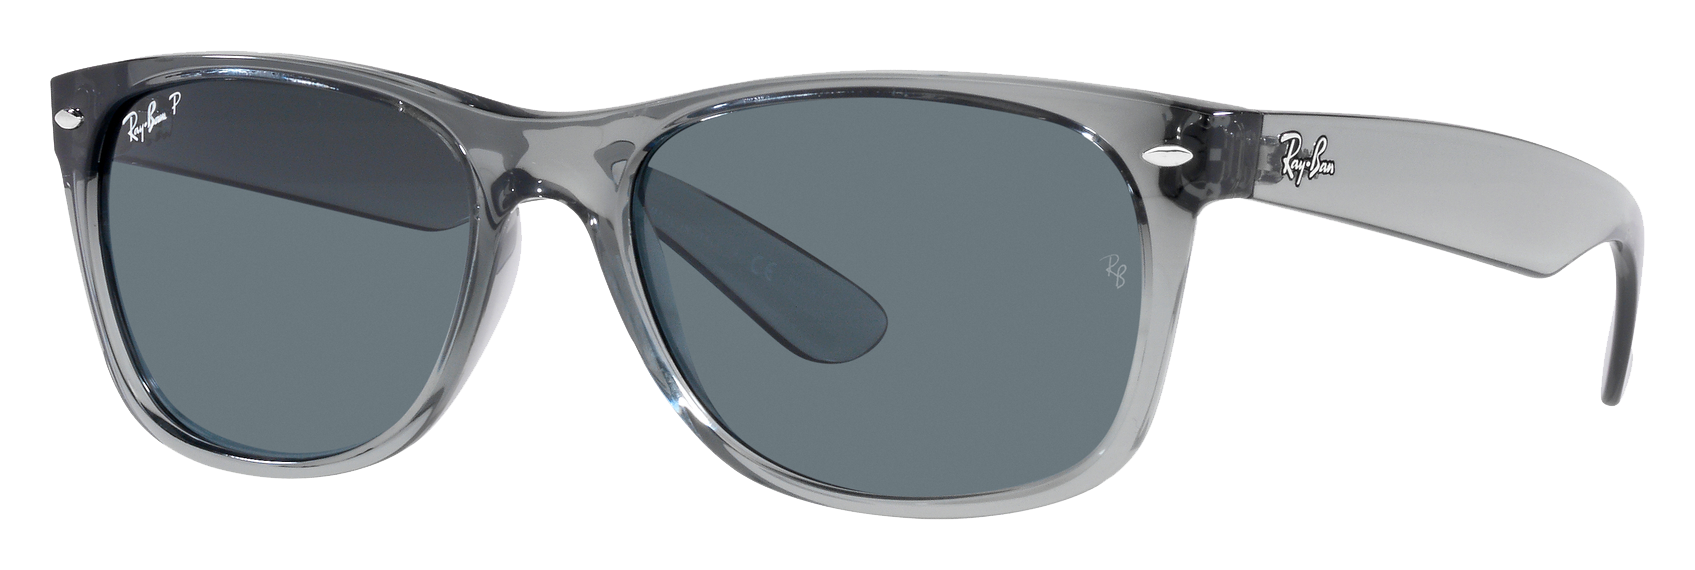 Ray-Ban New Wayfarer Classic RB2132 Glass Polarized Sunglasses | Bass ...